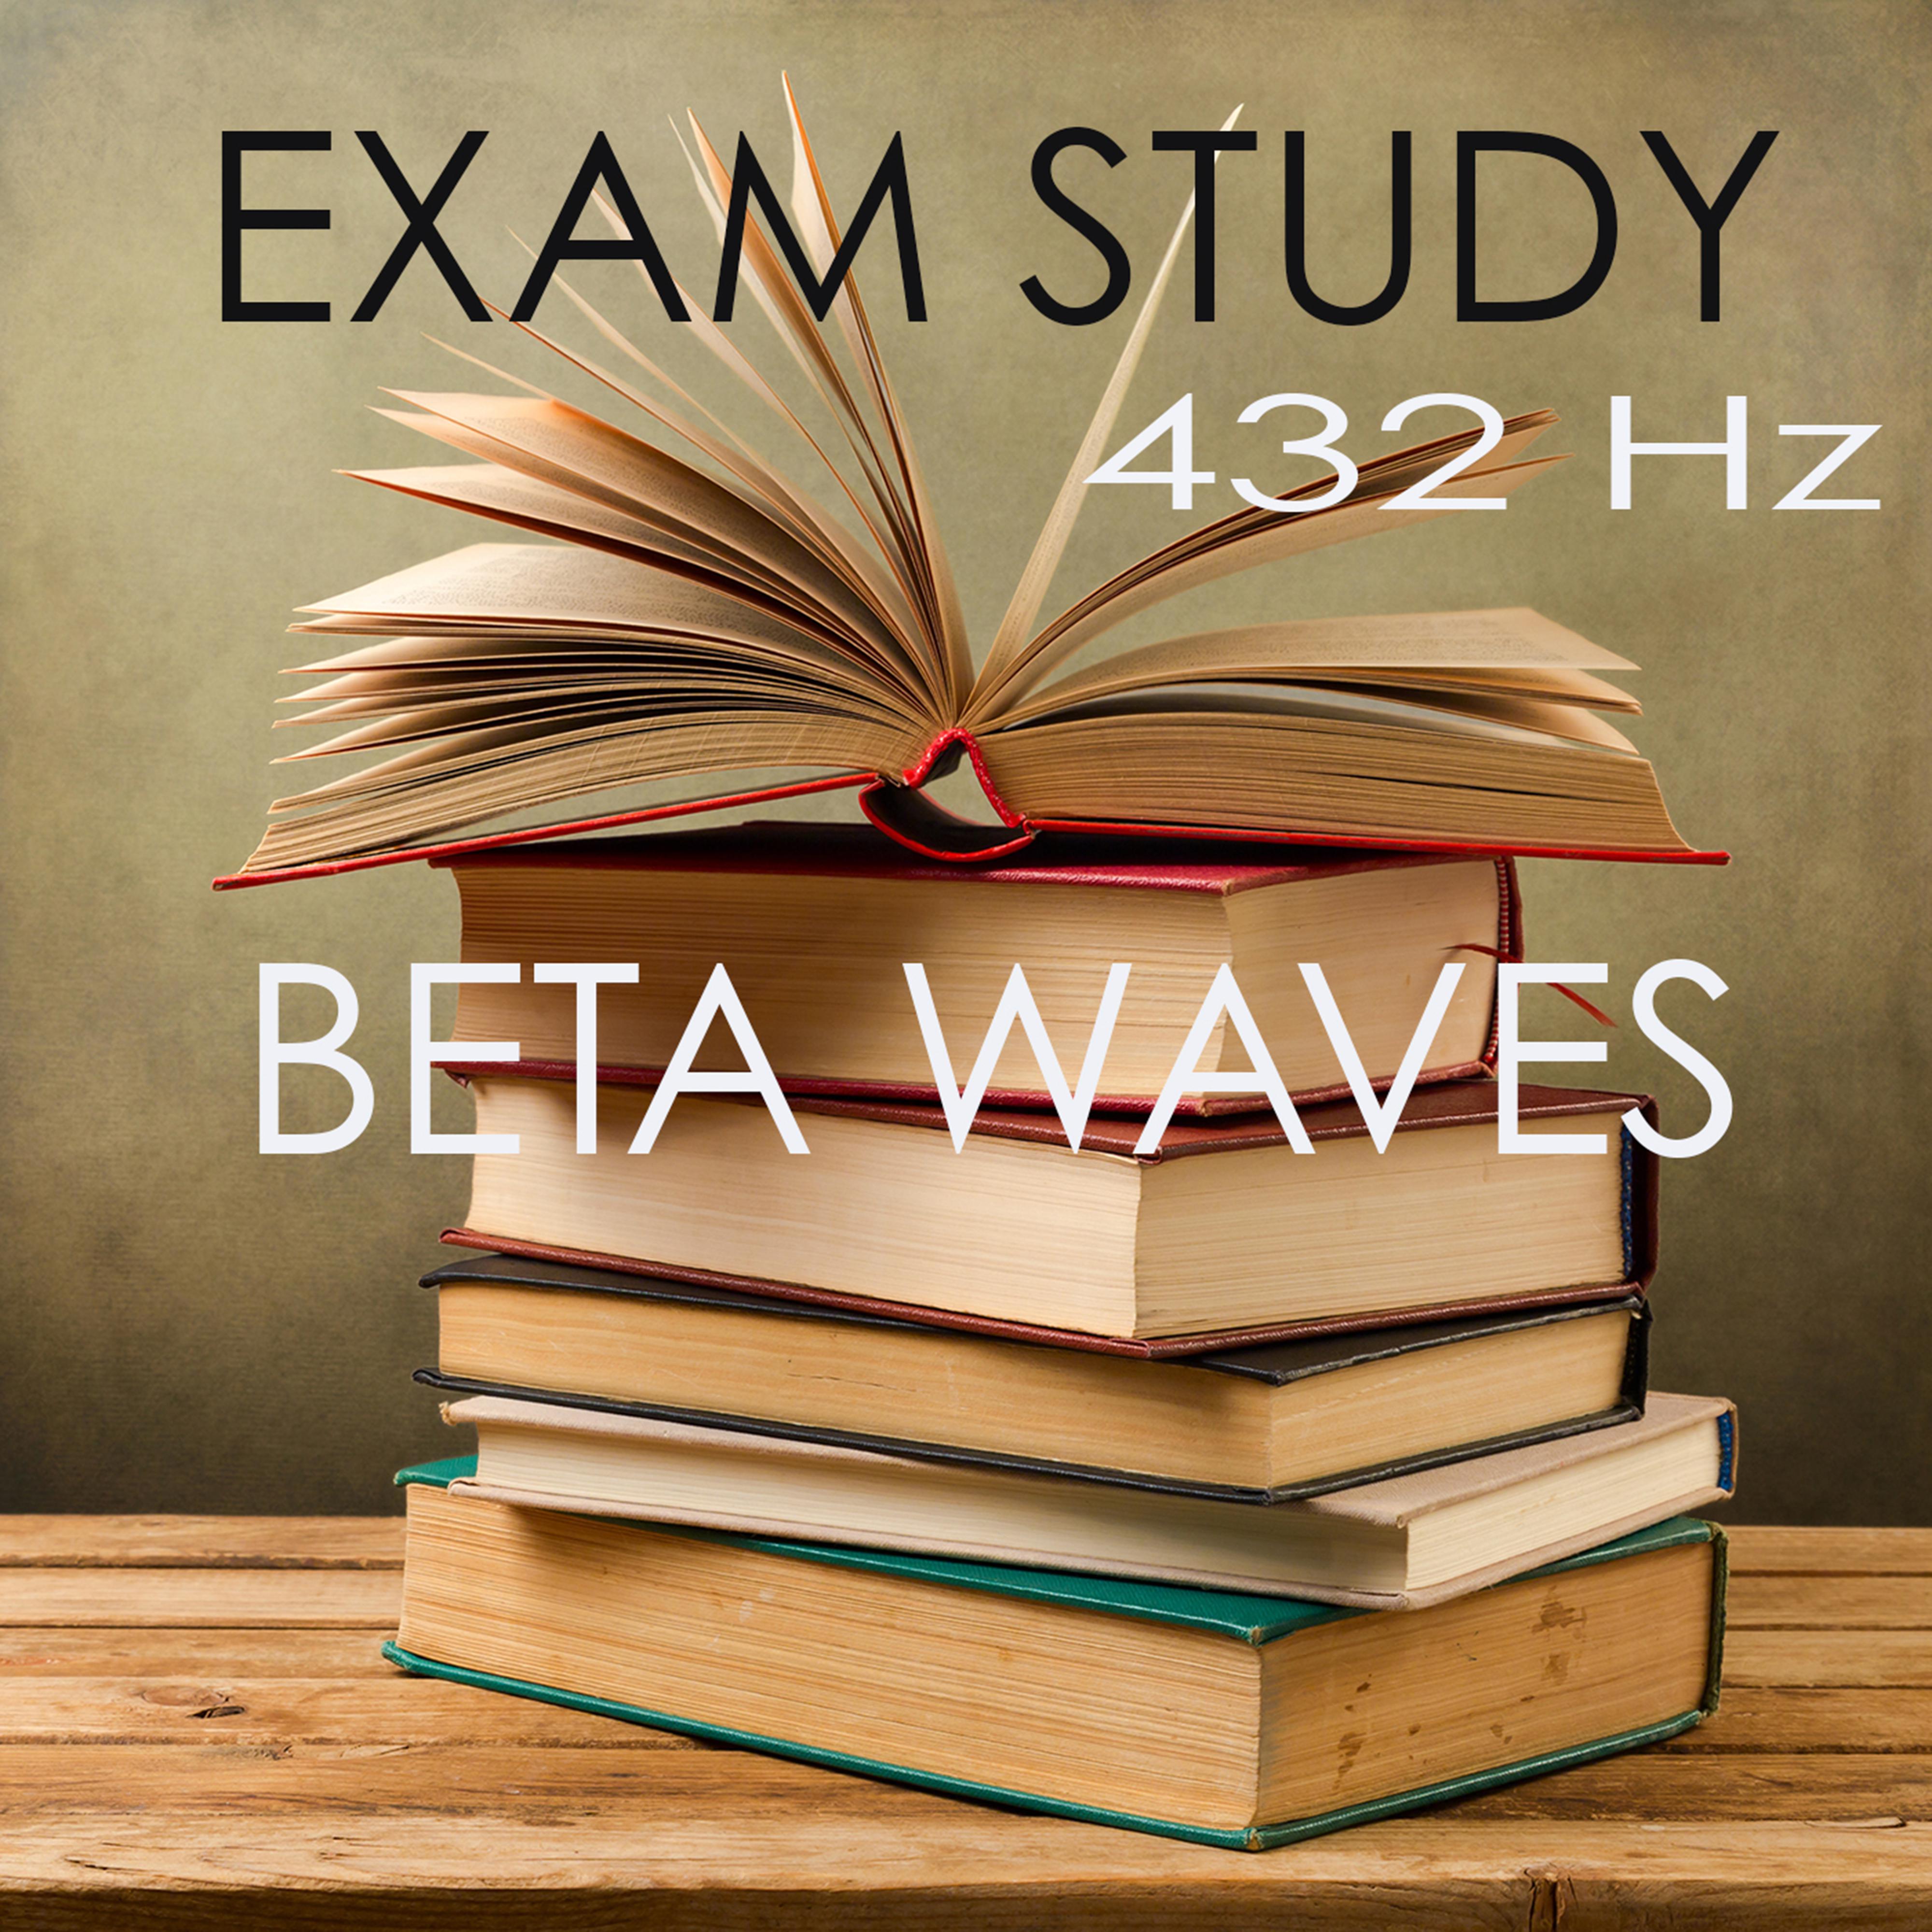 Exam Study Beta Waves 432 Hz